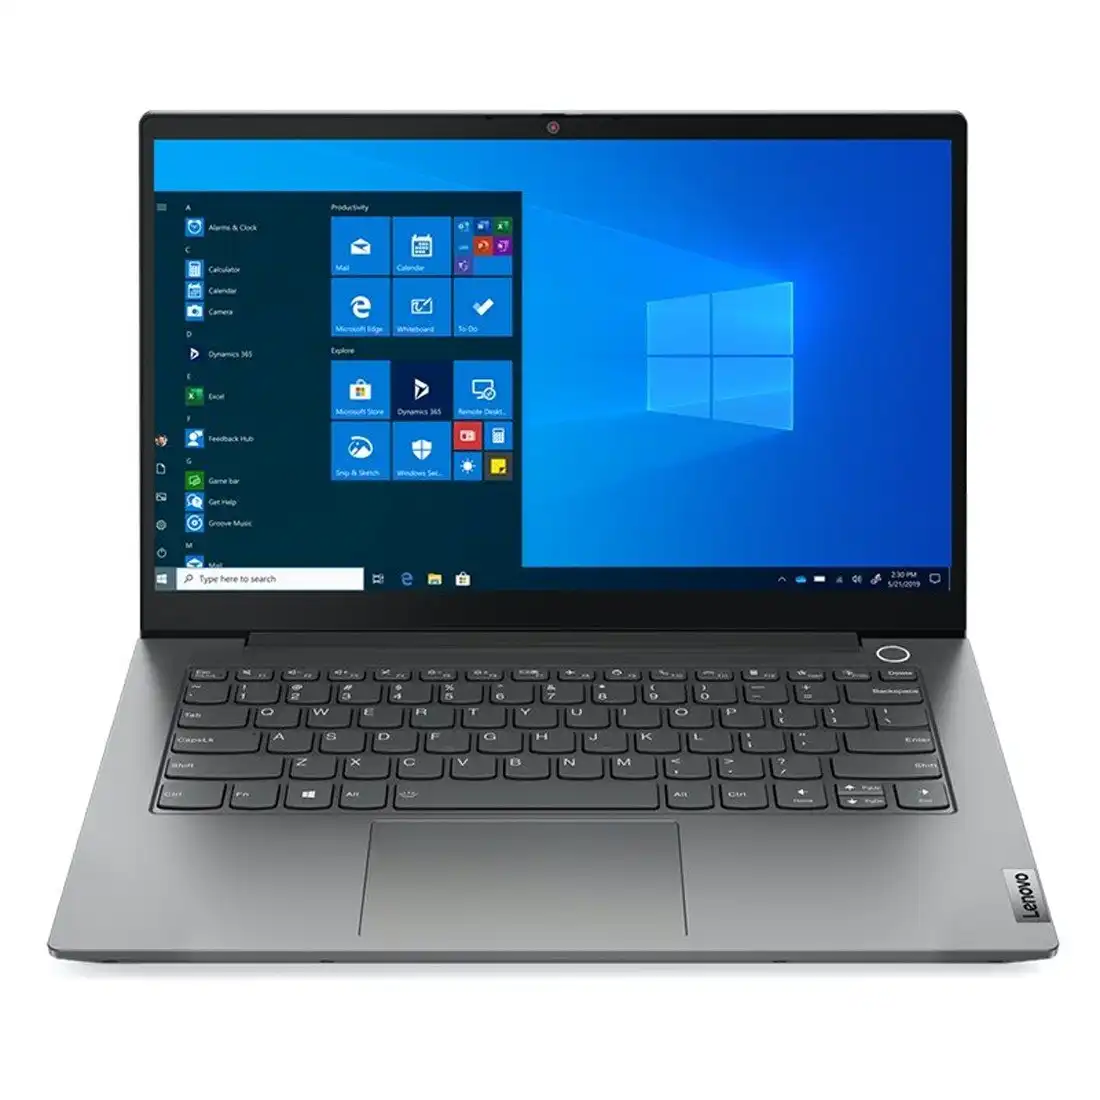 Lenovo ThinkBook 14 Gen 2 14" FHD Laptop (i5-1135G7, 16GB/256GB, Win10 Pro)